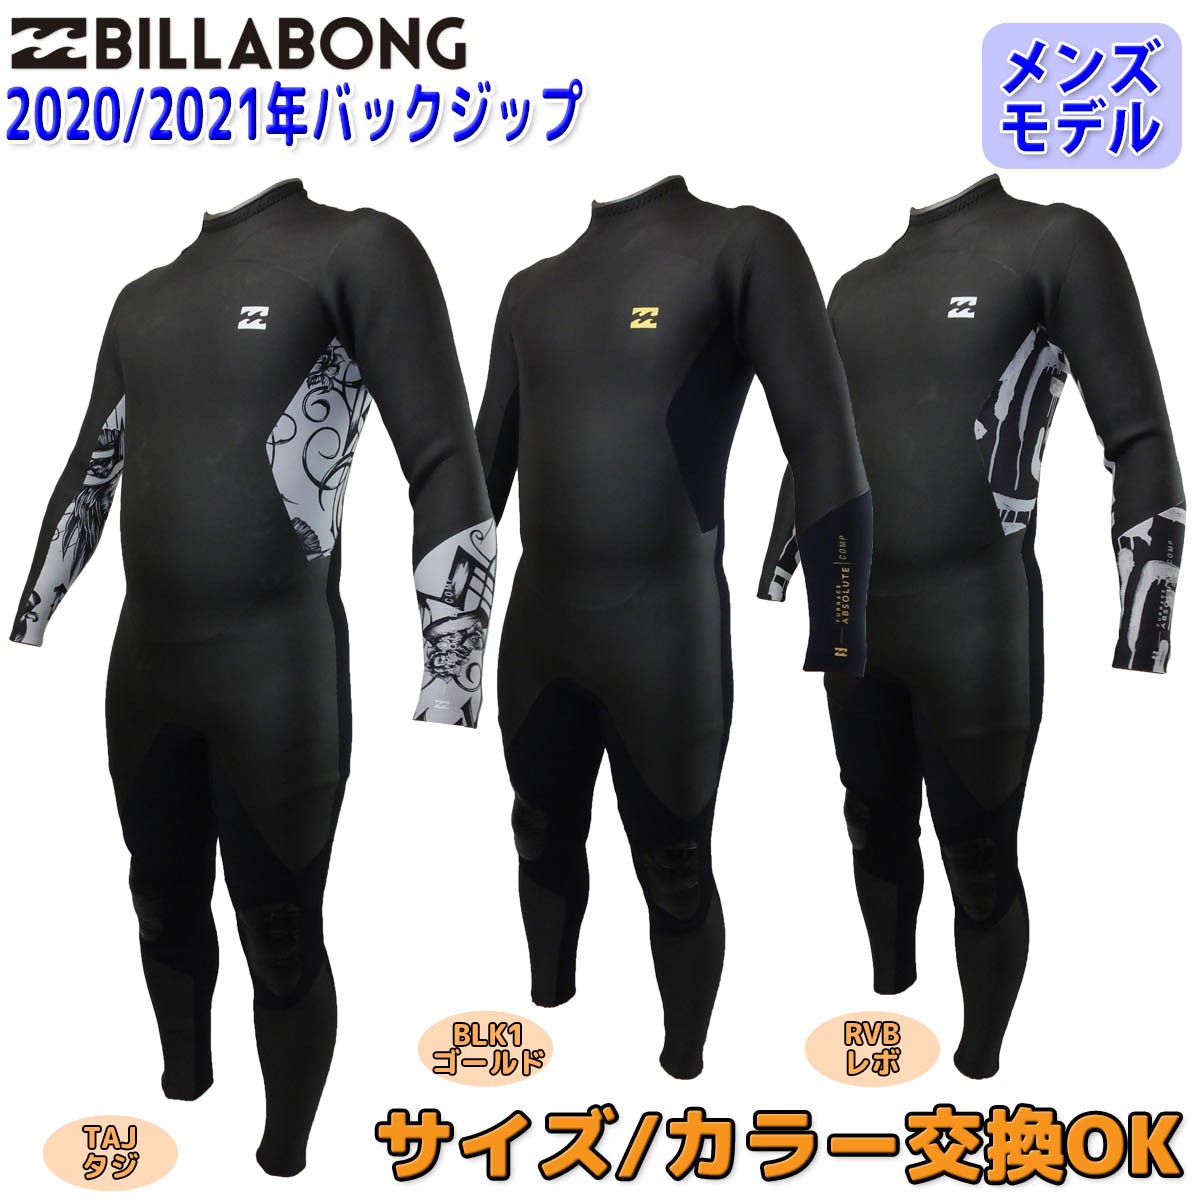 20-21 BILLABONG ビラボン セミドライ ウェットスーツ ウエットスーツ バックジッパー 5×3ミリ 秋冬用 メンズ バリュー  2020/2021年 BA018-626 日本正規品